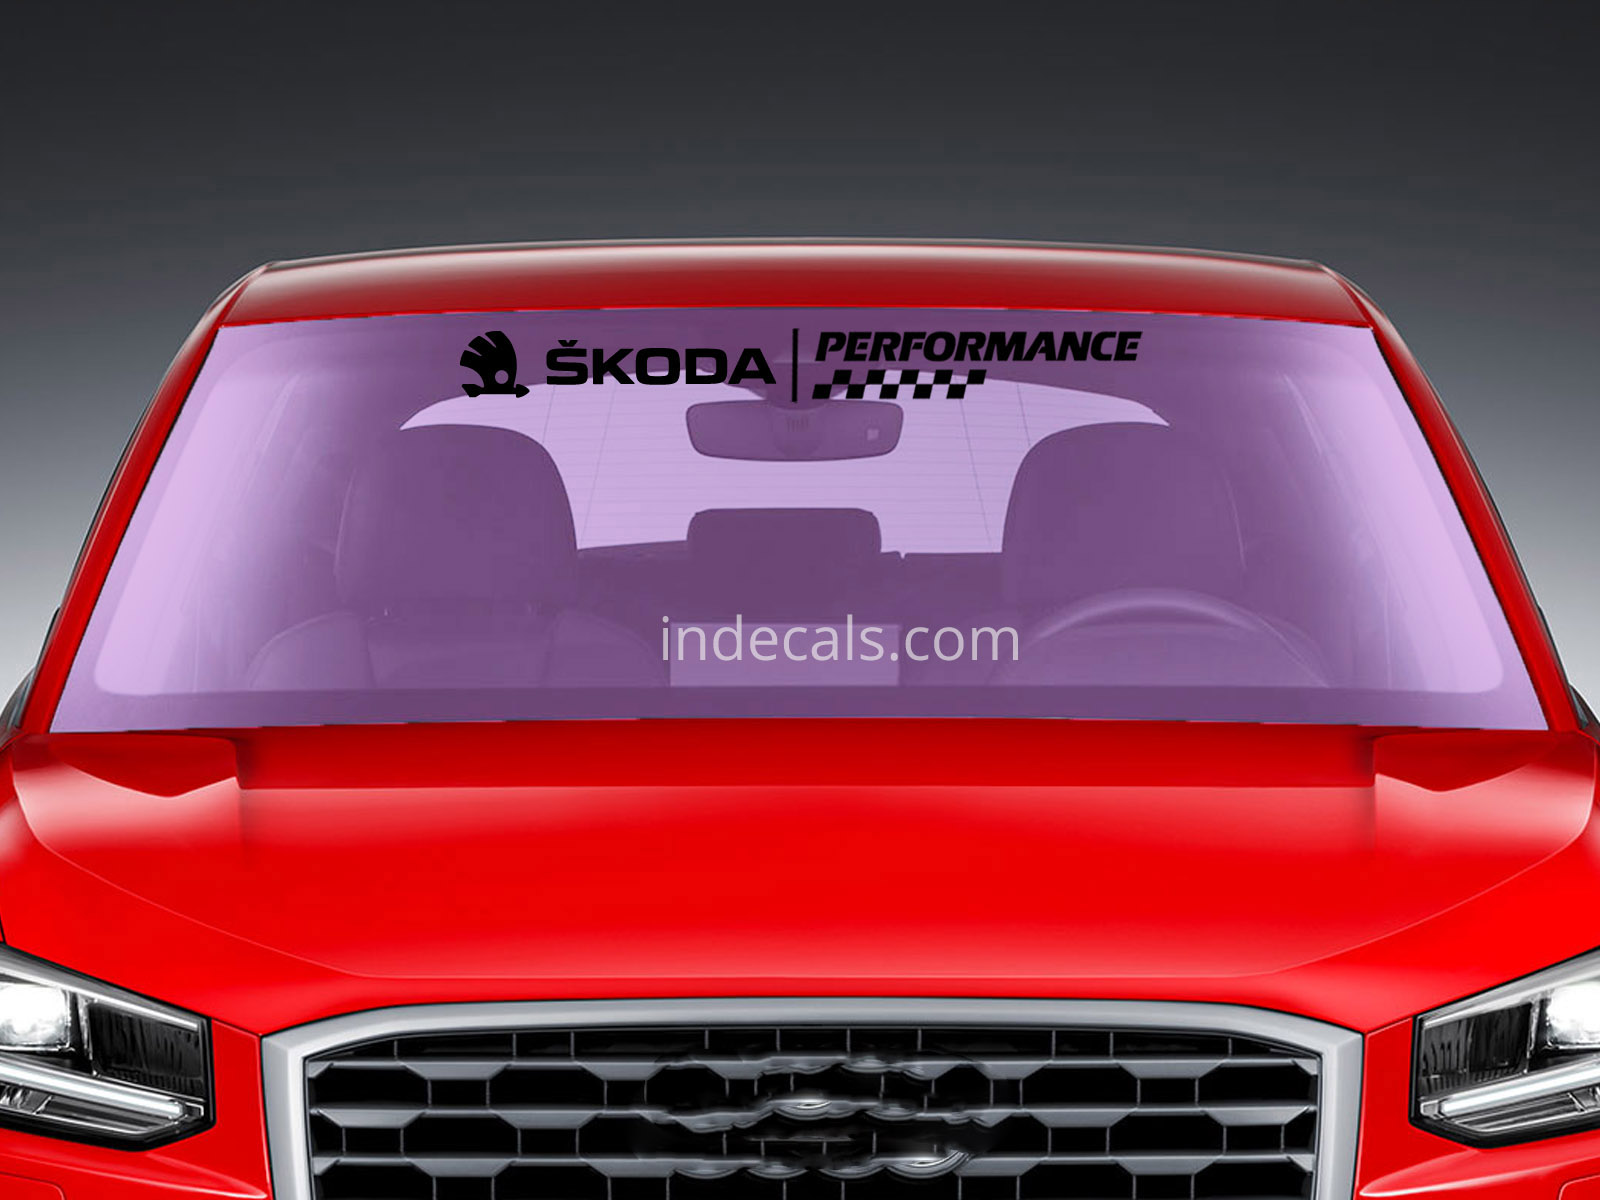 1 x Skoda Performance Sticker for Windshield or Back Window - Black